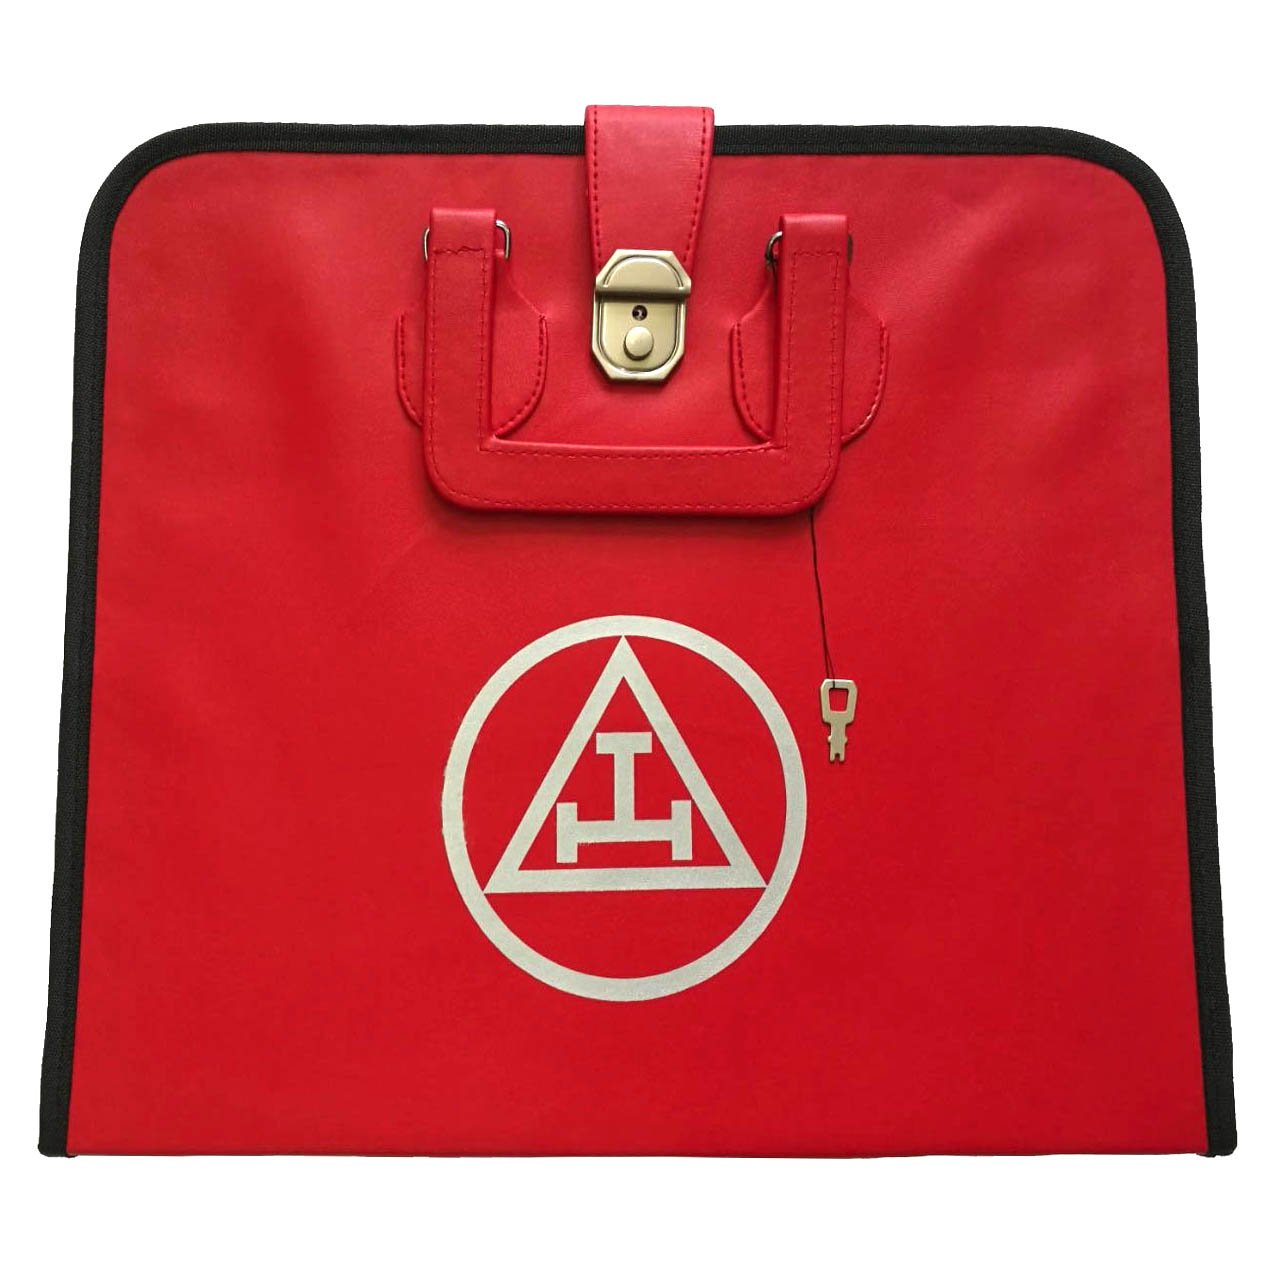 Royal Arch Chapter Apron Case - Red Imitation Leather MM, WM, Provincial - Bricks Masons